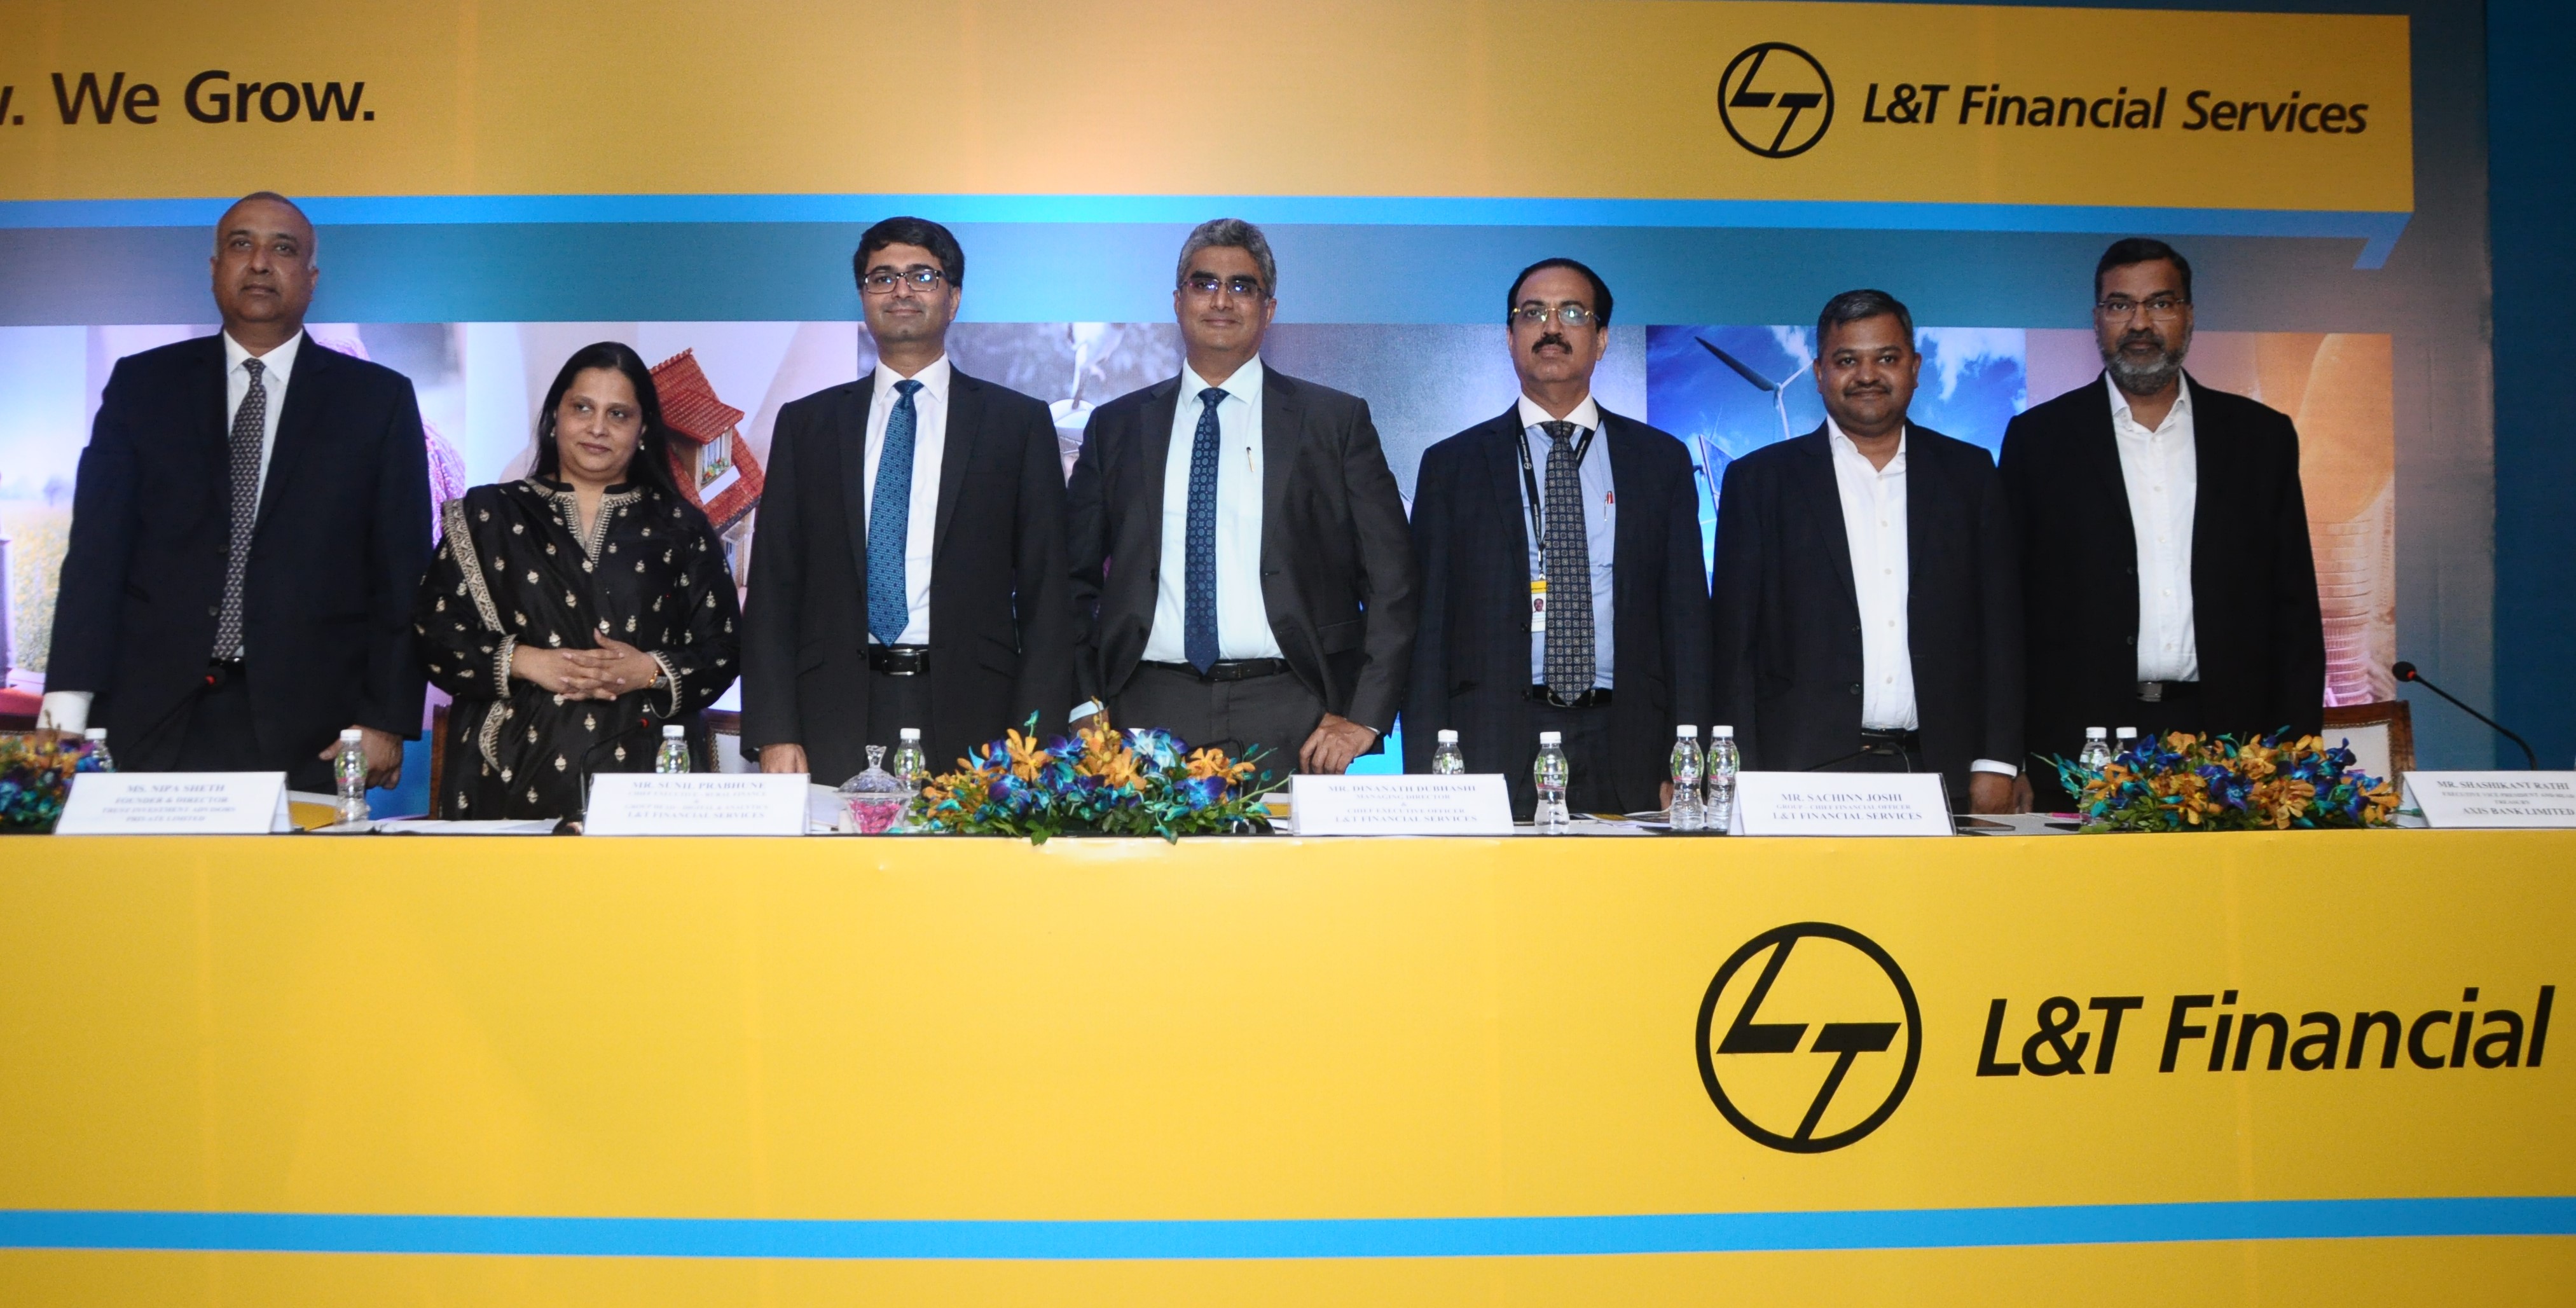 (LtoR) : Mr. Ajay Manglunia, Edelweiss Financial Services Limited, Ms. Nipa Sheth, Trust Investment Advisors Pvt.Ltd., Mr.Sunil Prabhune, Chief Executive - Rural Finance & Group Head, Digital & Analytics, L&T Financial Services, Mr. Dinanath Dubhashi, MD & CEO, L&T Financial Services, Mr. Sachinn Joshi, Group - CFO, L&T Financial Services, Mr. Shashikant Rath, Axis Bank Limited, Mr. Ashish Agarwal, A.K. Capital Services Limited at the L&T Finance Services Press Conference held in Mumbai.- Photo By Sachin Murdeshwar GPN News Network 